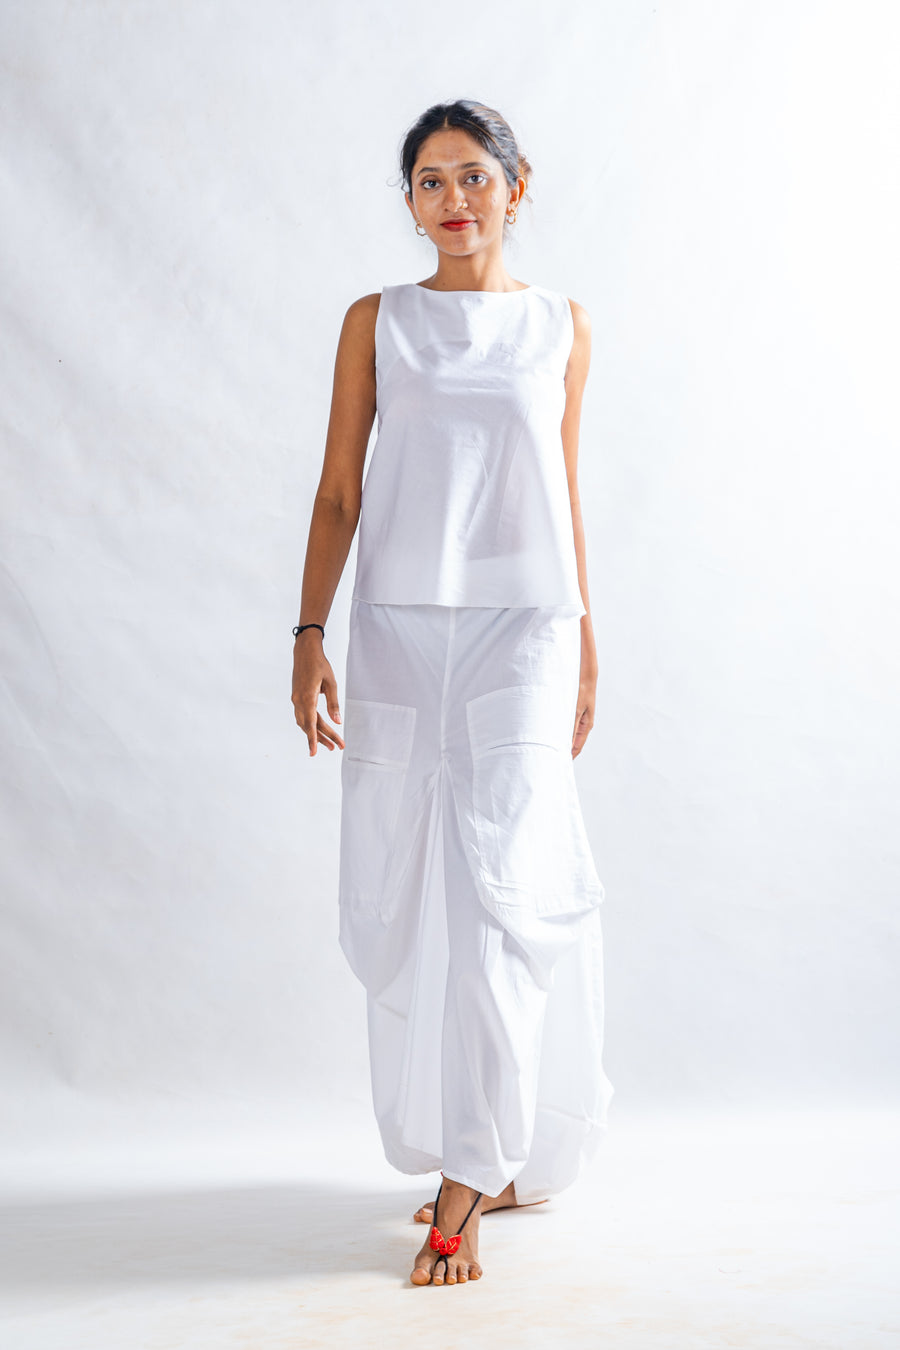 Briset - White cotton Set of Skirt and Top